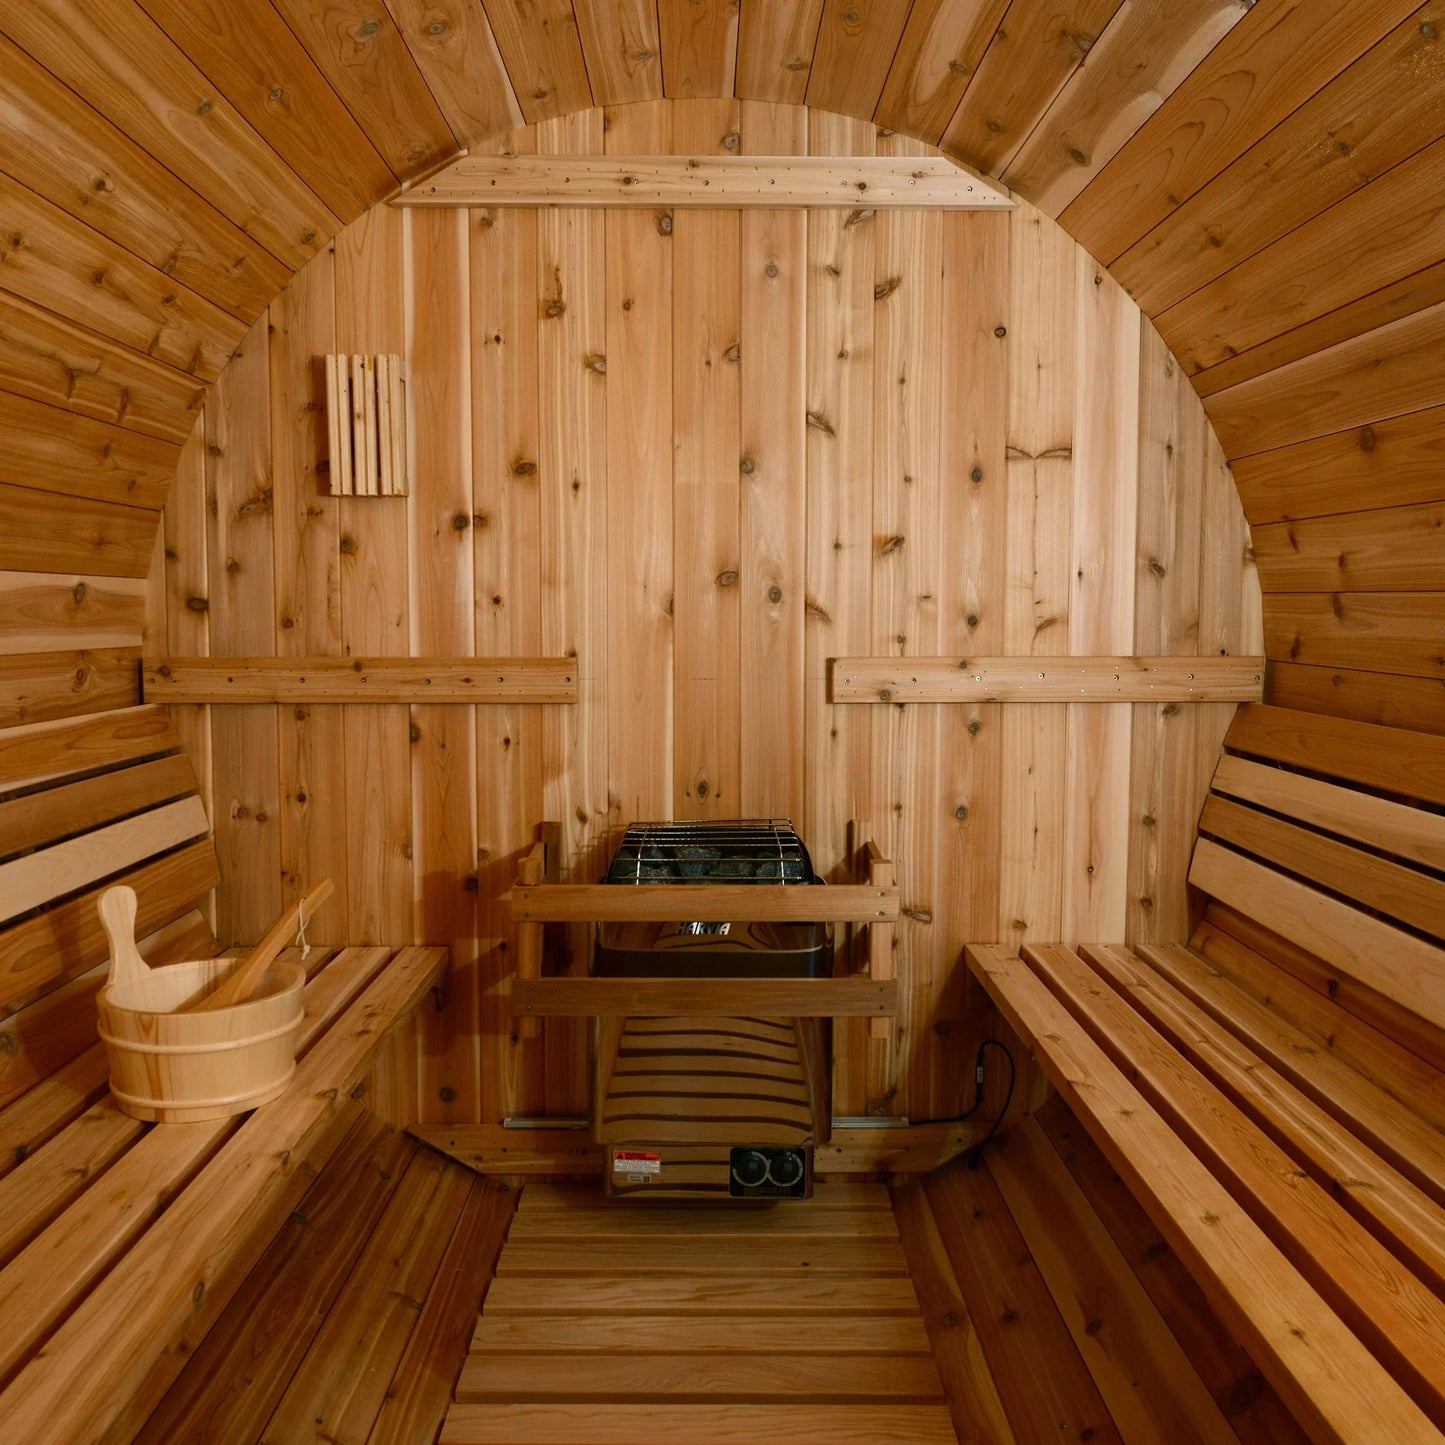 almost heaven saunas-wood barrel- barrel sauna-thermally modified hemlock-outdoor sauna-audra-2 person-4 person-barrel interior